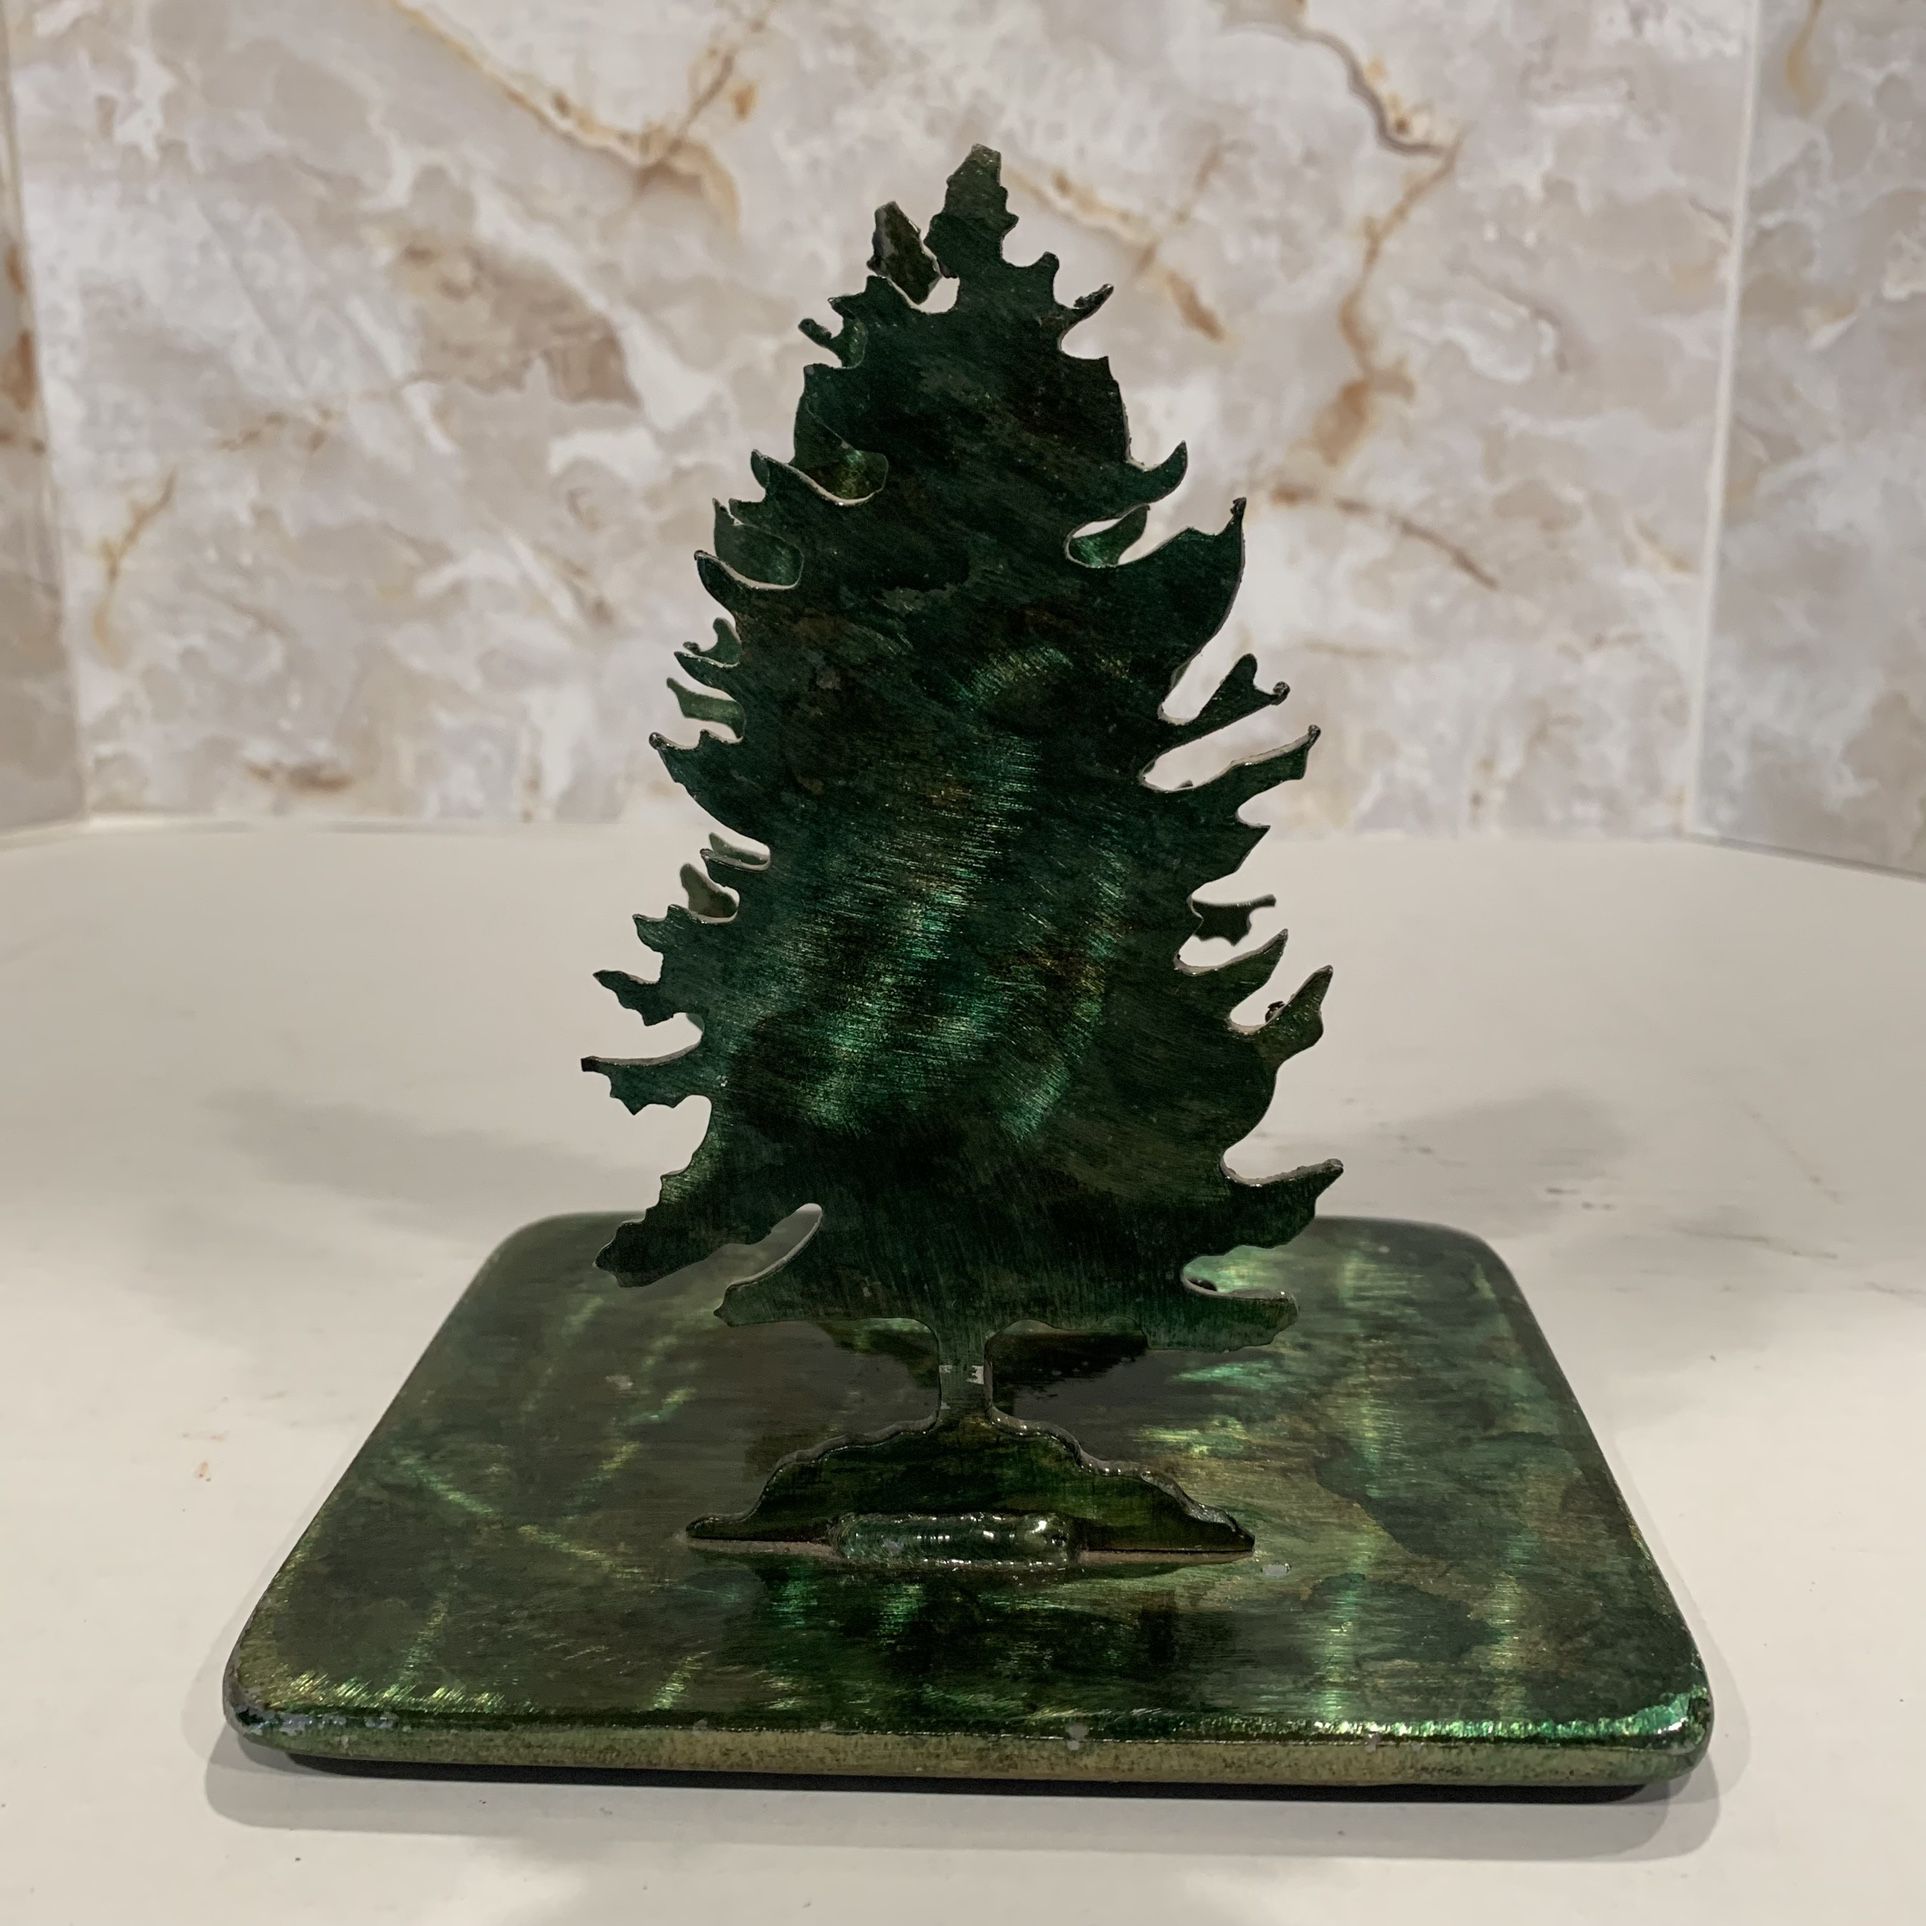 Geronimo Designs And Fabrication Tucson AZ Pine Trees Letter Paper Holder Metal Art 